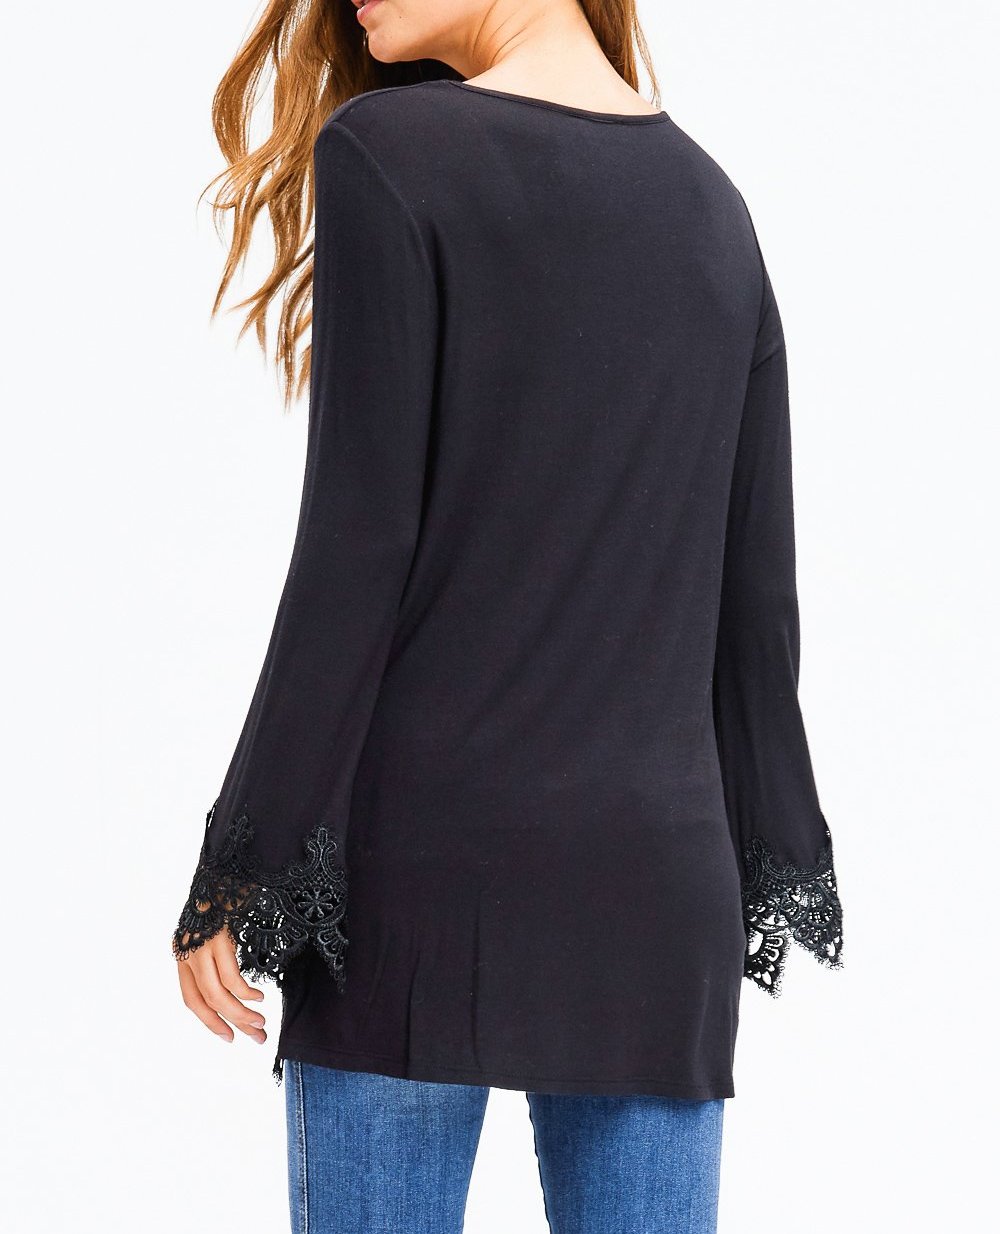 Crochet Hem Long Sleeve Tunic Top in Black